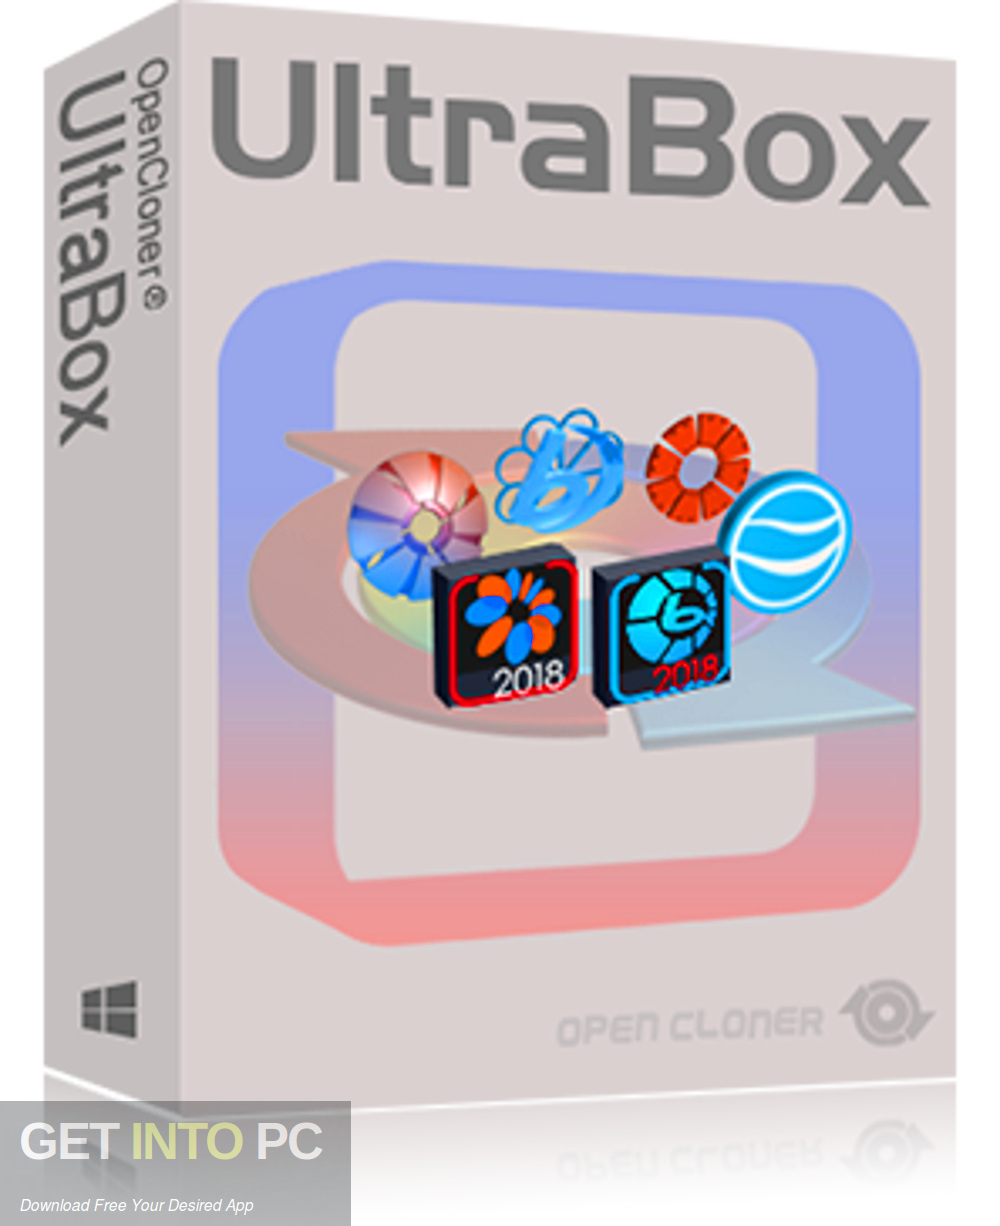 OpenCloner UltraBox Pro 2019 Free Download-GetintoPC.com